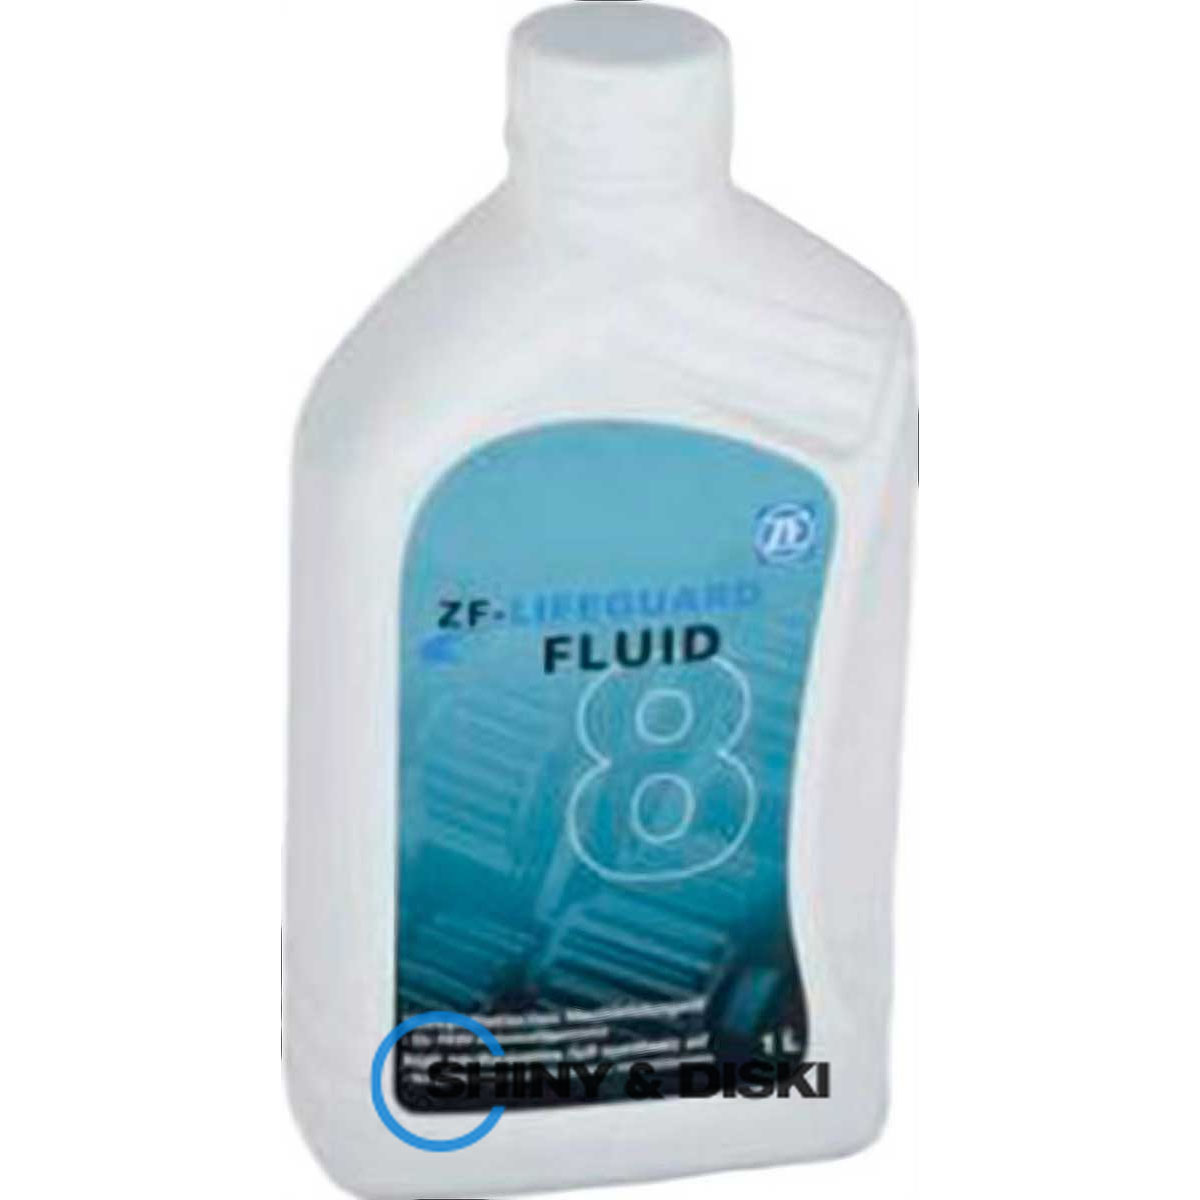 zf lifeguardfluid 8